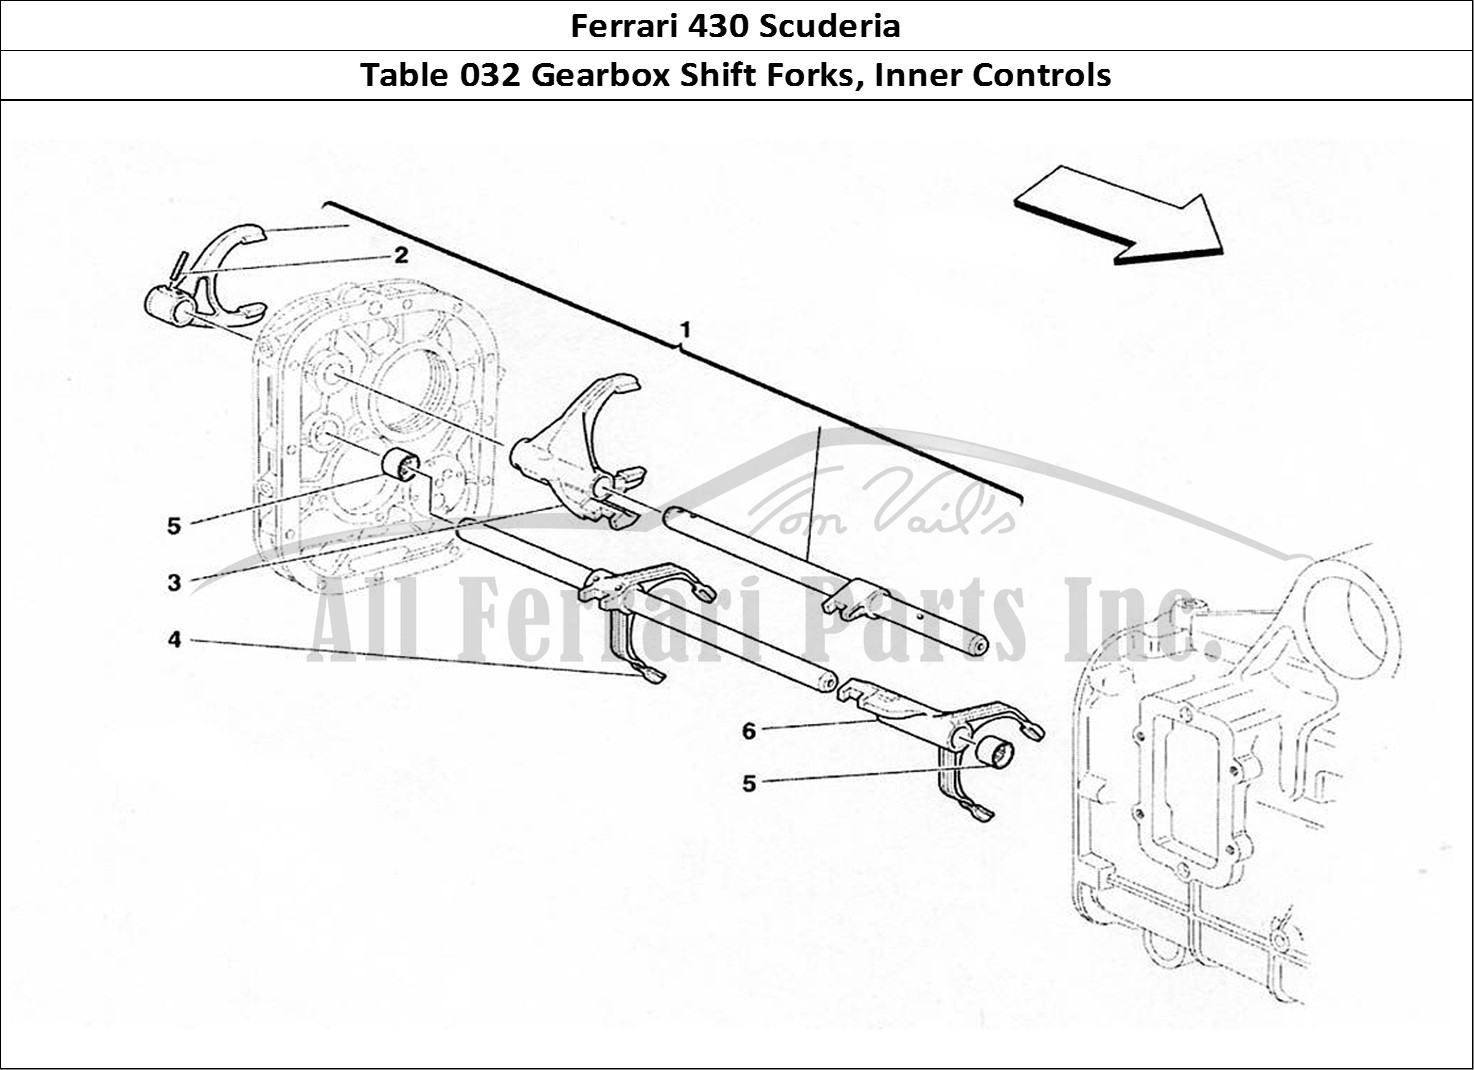 Ferrari Parts Ferrari 430 Scuderia Page 032 Inside Gearbox Controls